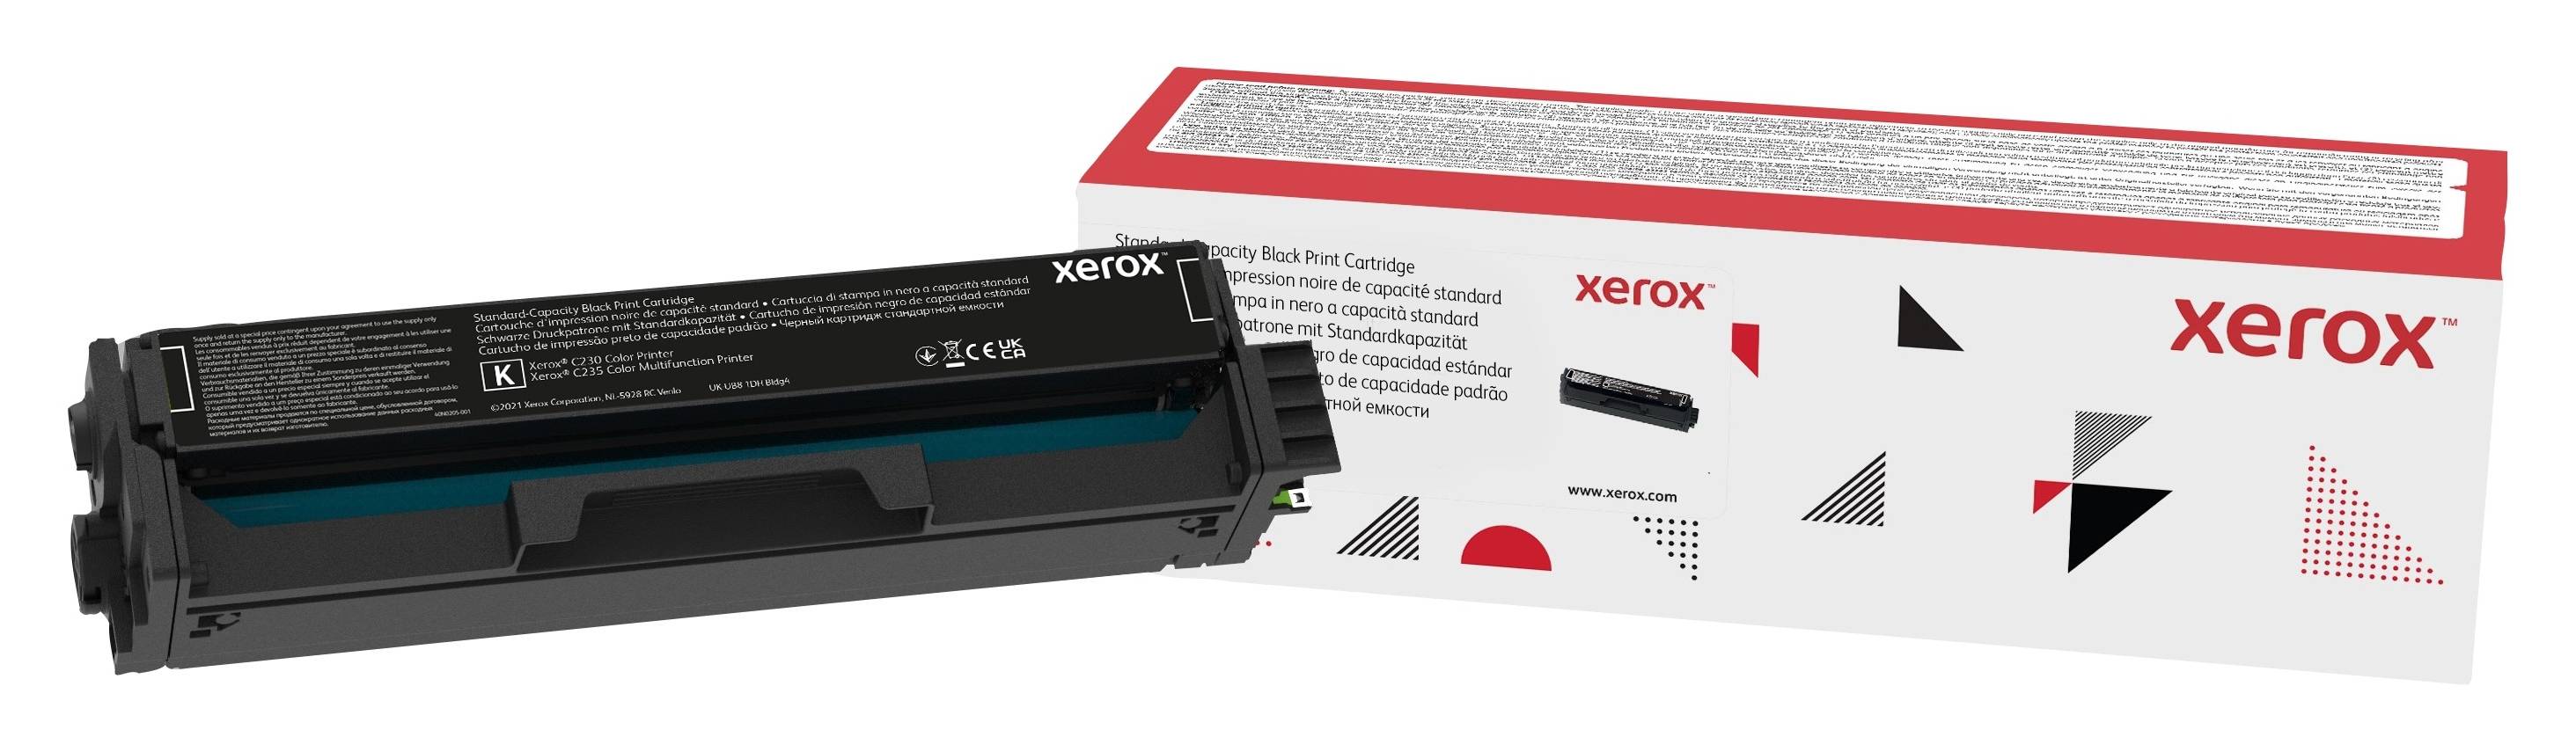 Rca Informatique - Image du produit : XEROX C230 / C235 BLACK STD CAP TONER CARTRIDGE (1500 PAGES)